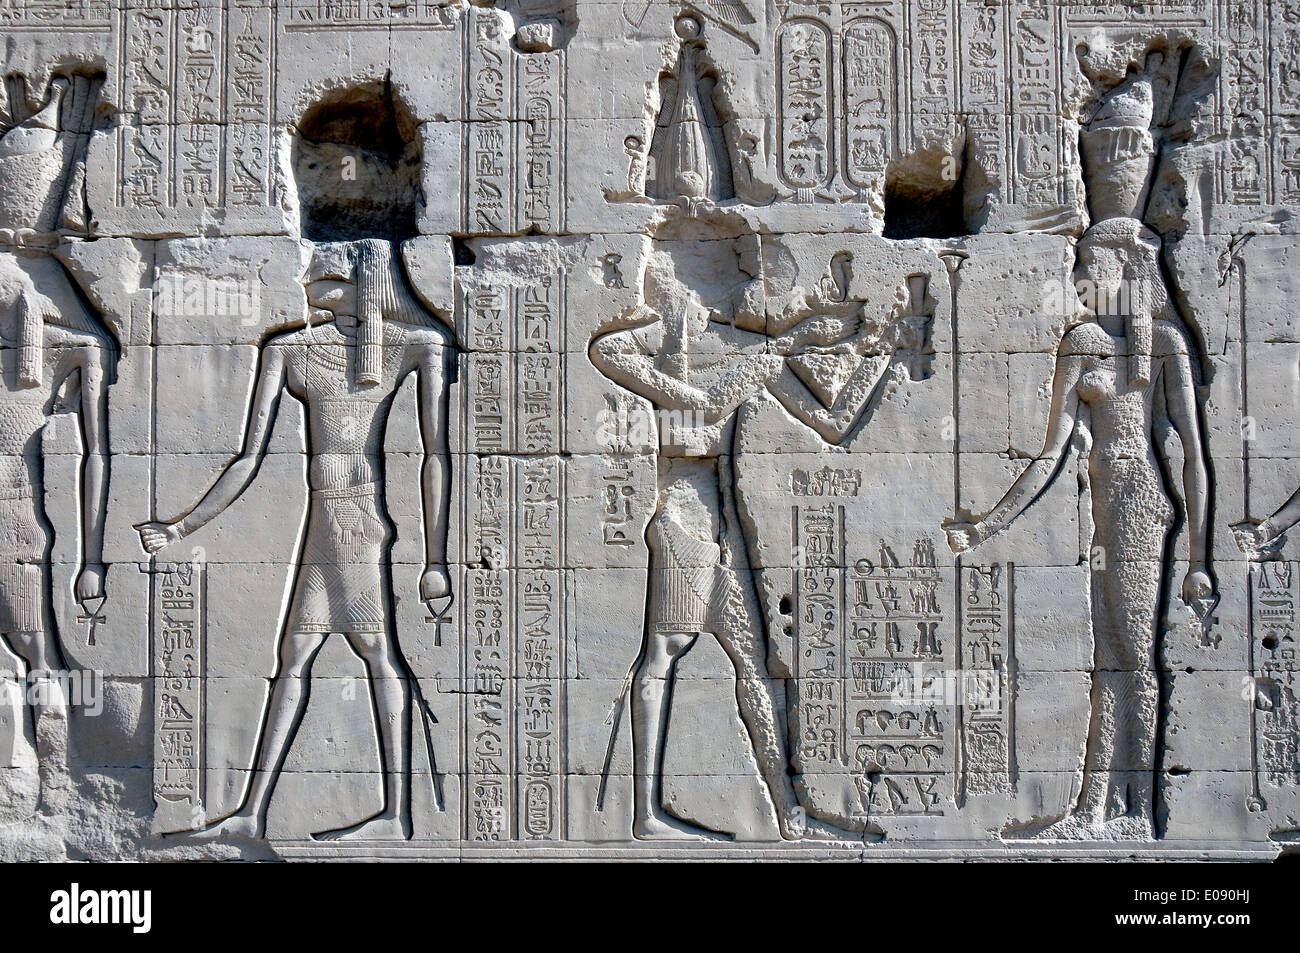 egipto-dendera-ptolemaico-templo-de-la-diosa-hathor-tallados-en-las-paredes-de-damnatio-memoriae-e090hj.jpg